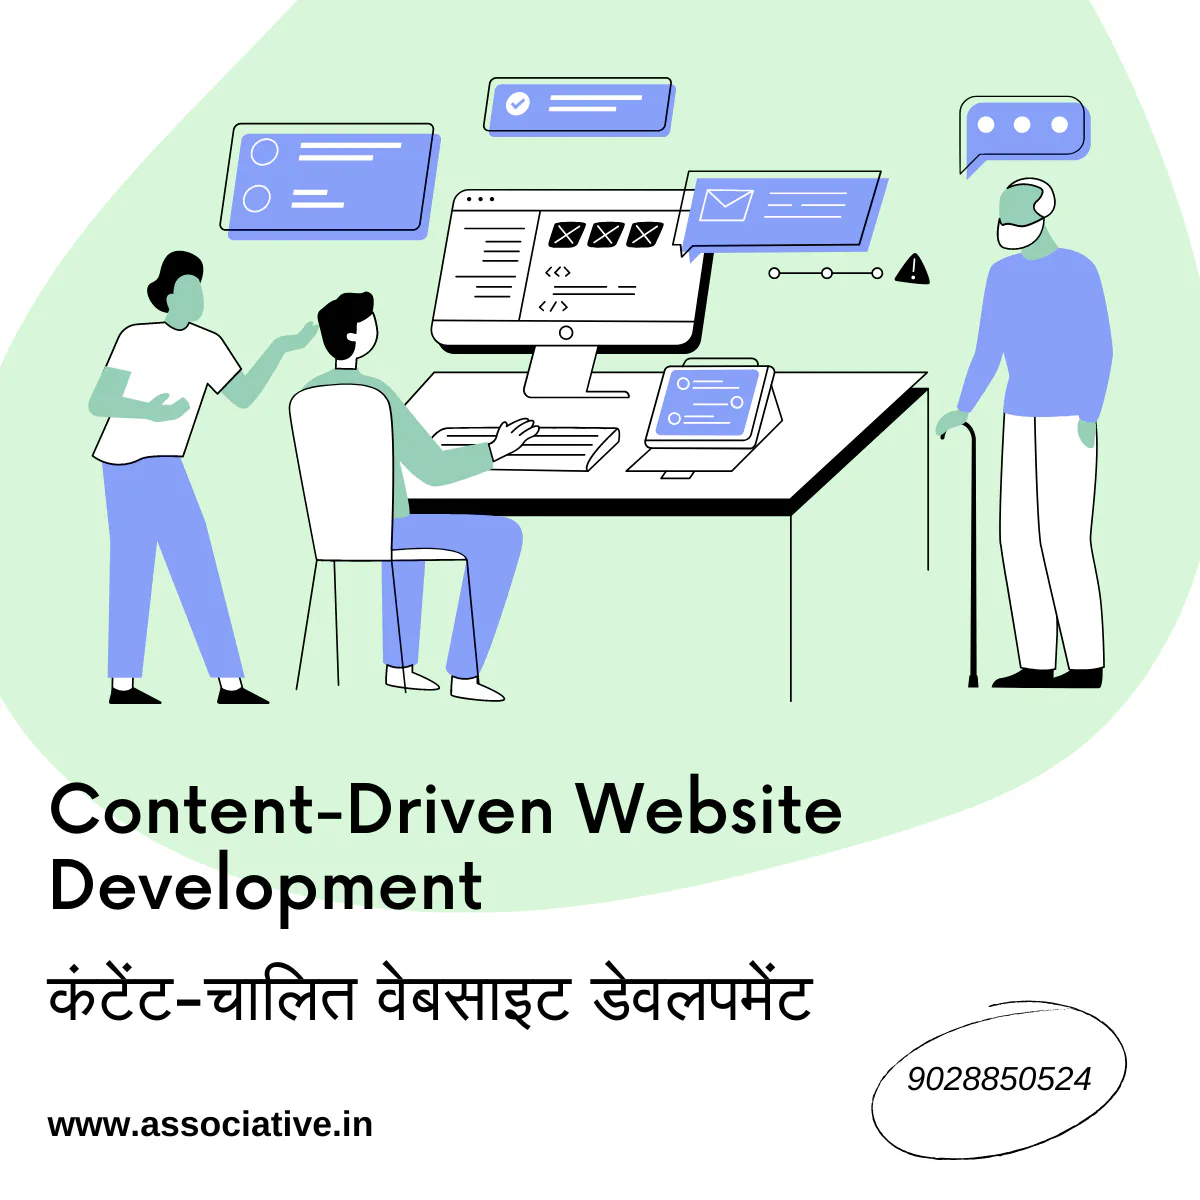 Content-Driven Website Development